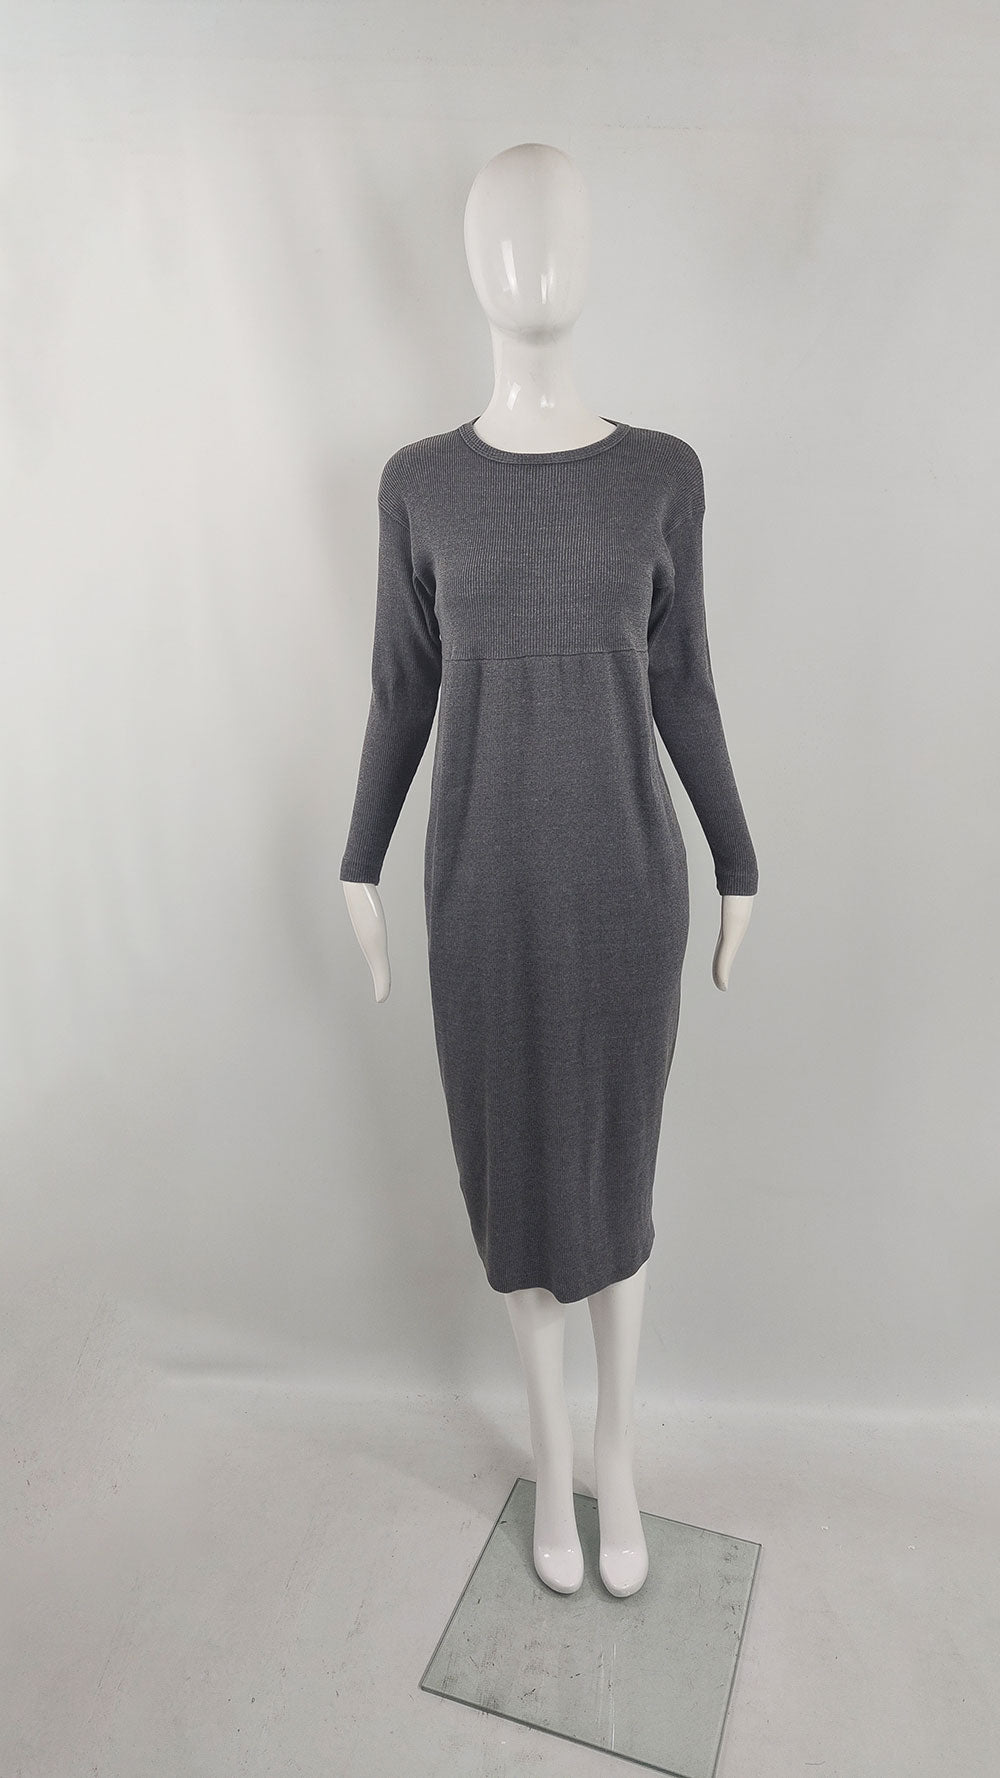 Joseph Tricot Vintage Grey Ribbed Knit Long Sleeve Dress